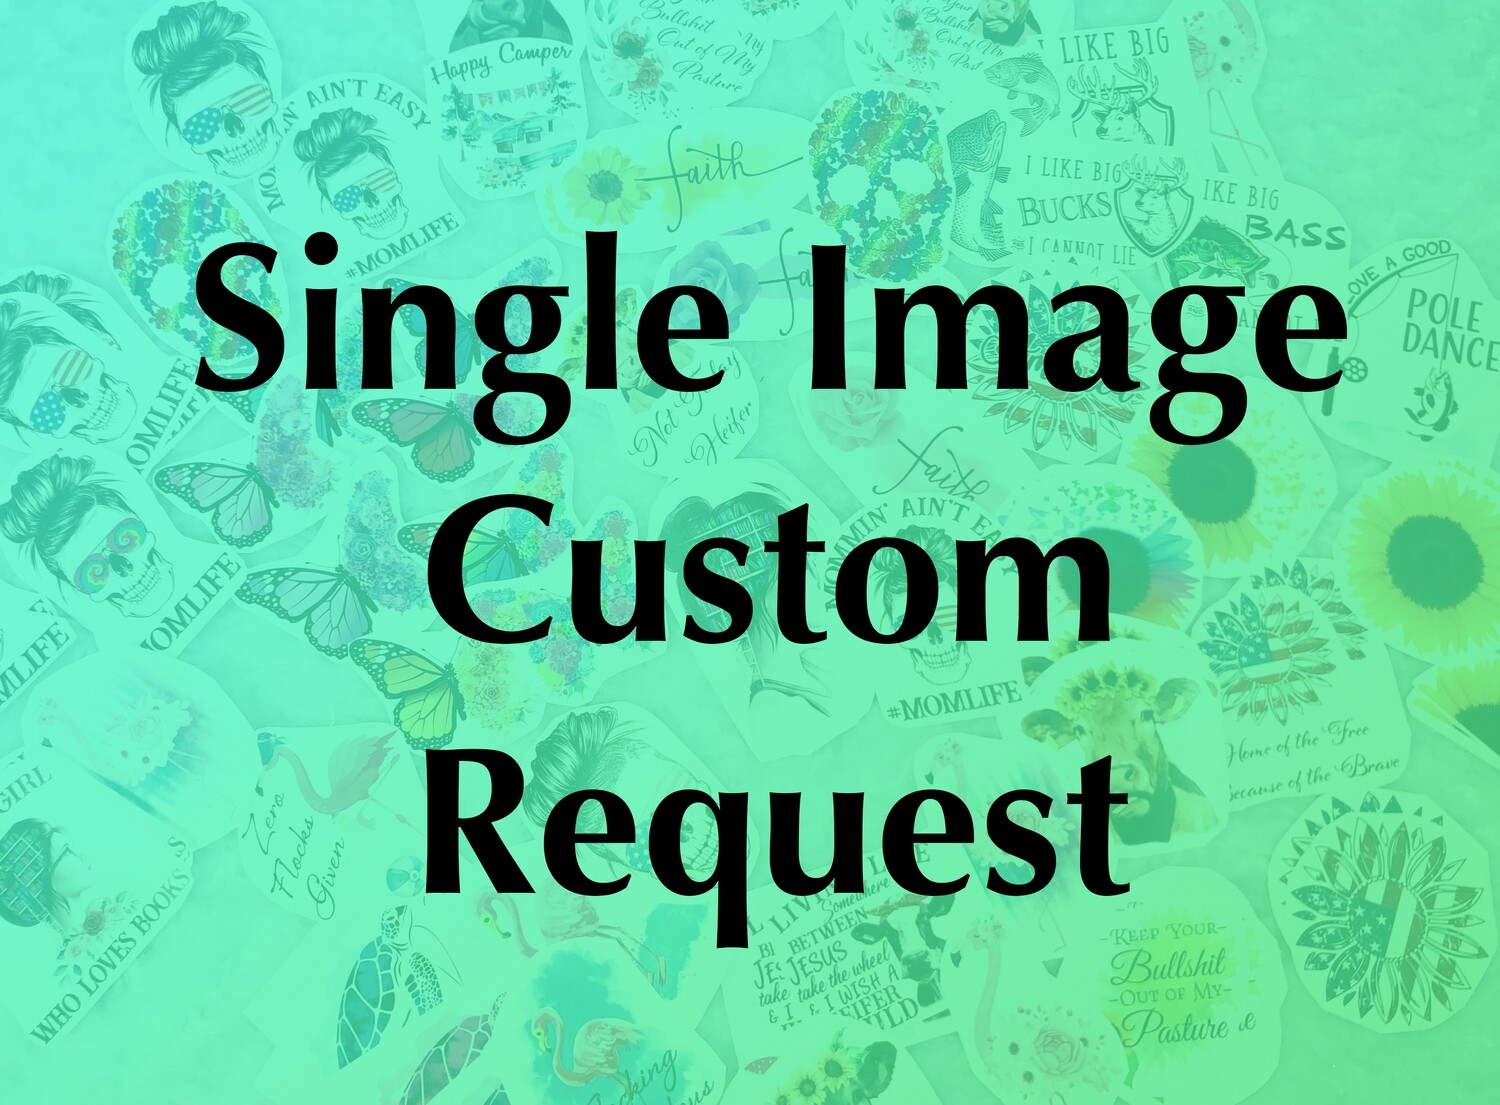 Custom - Print Your Image (No Edits), Waterslide